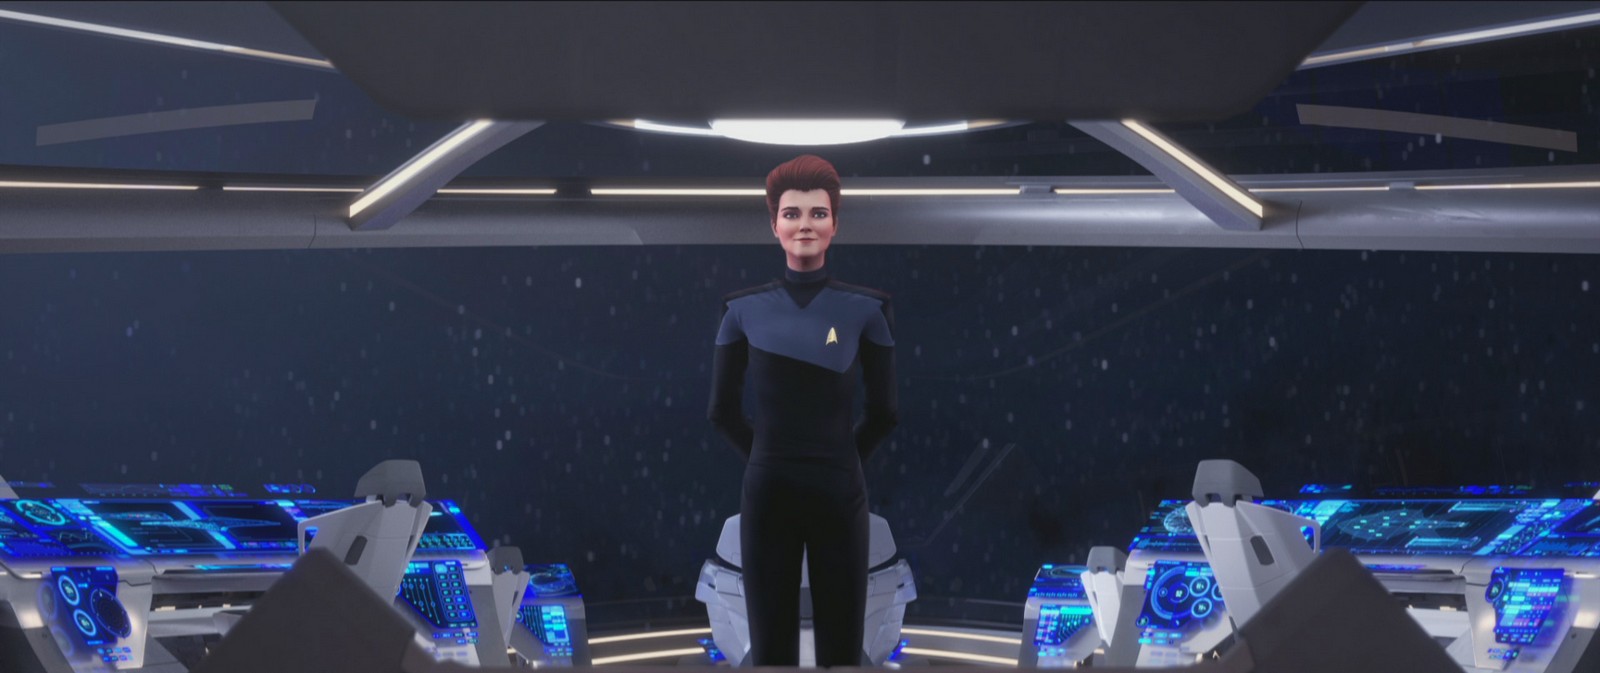 Holo-Janeway says goodbye to Dal on the bridge